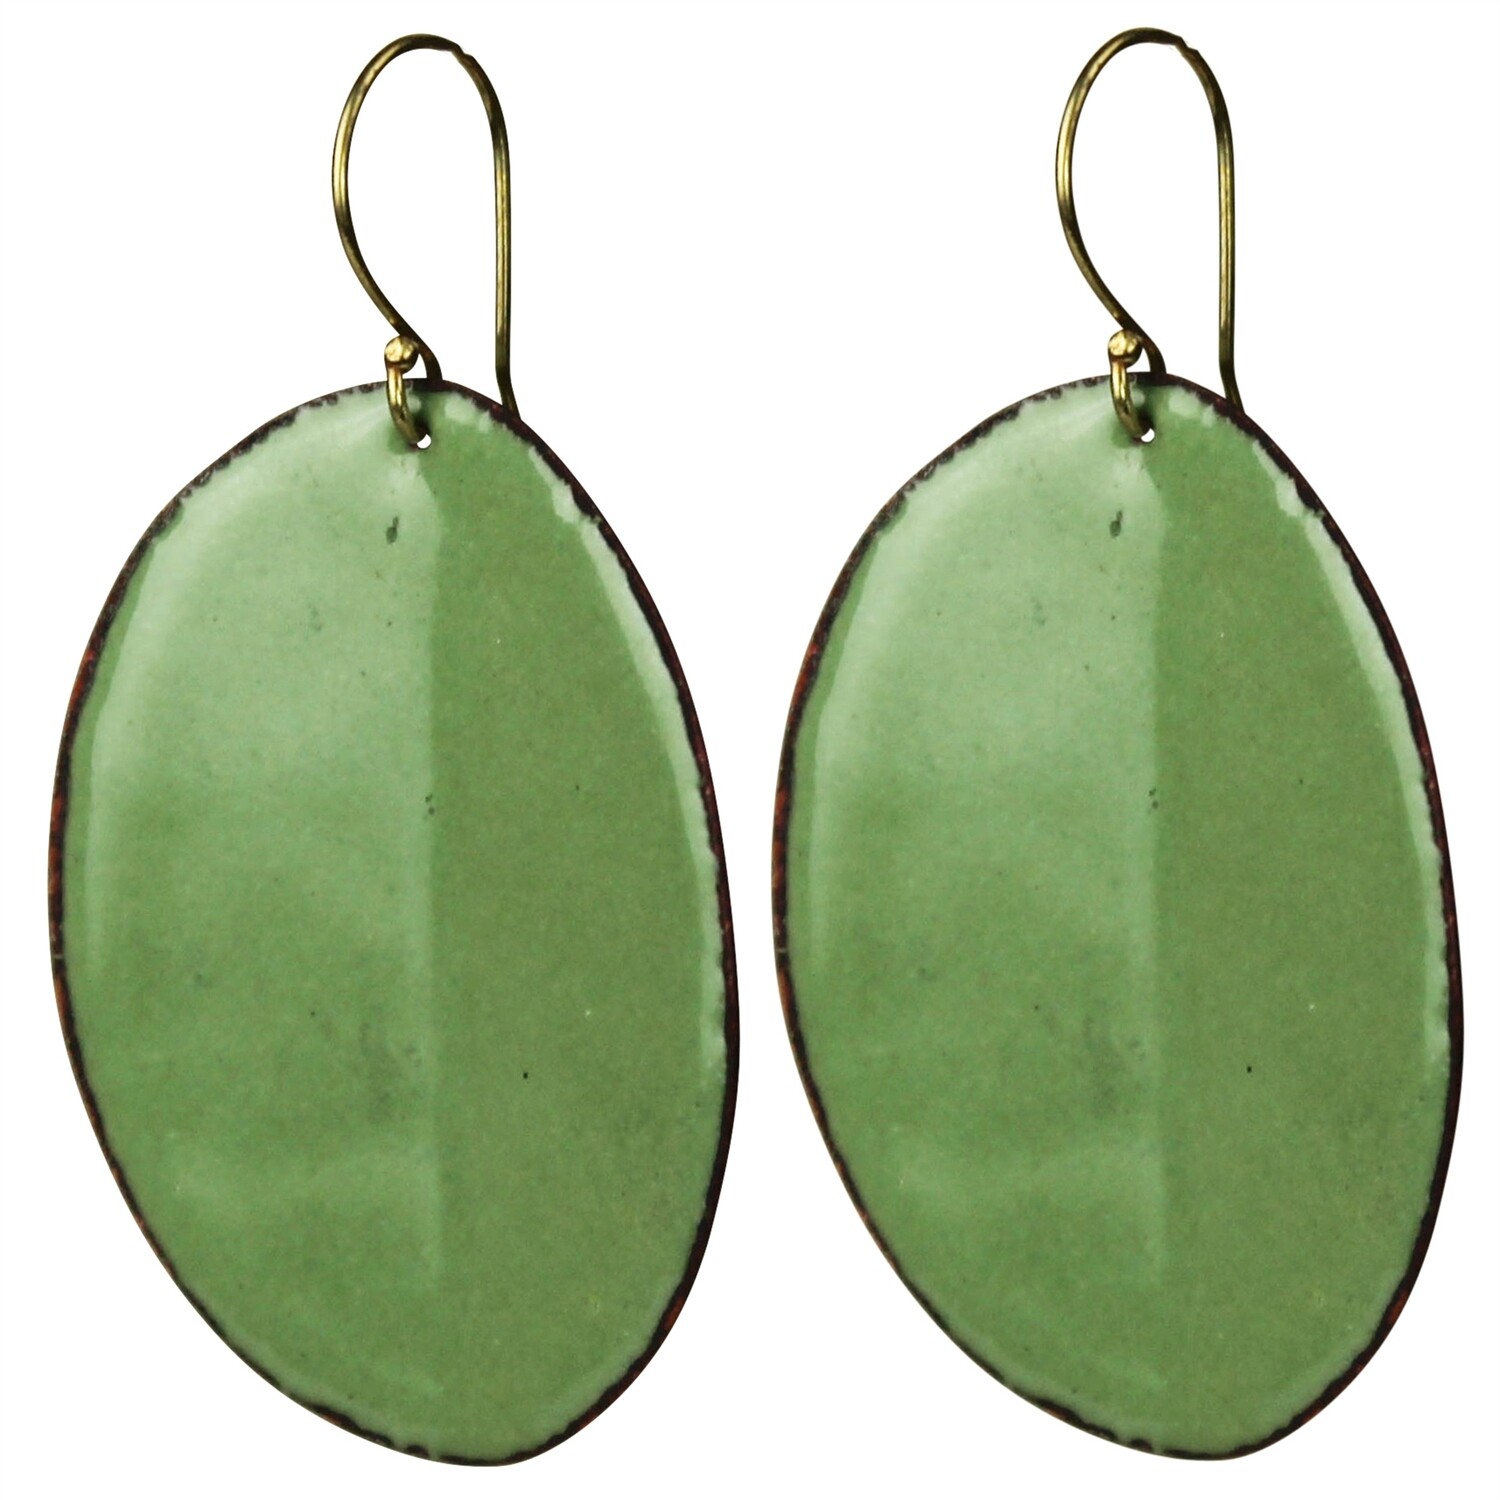 Earrings - Creased Oval Green